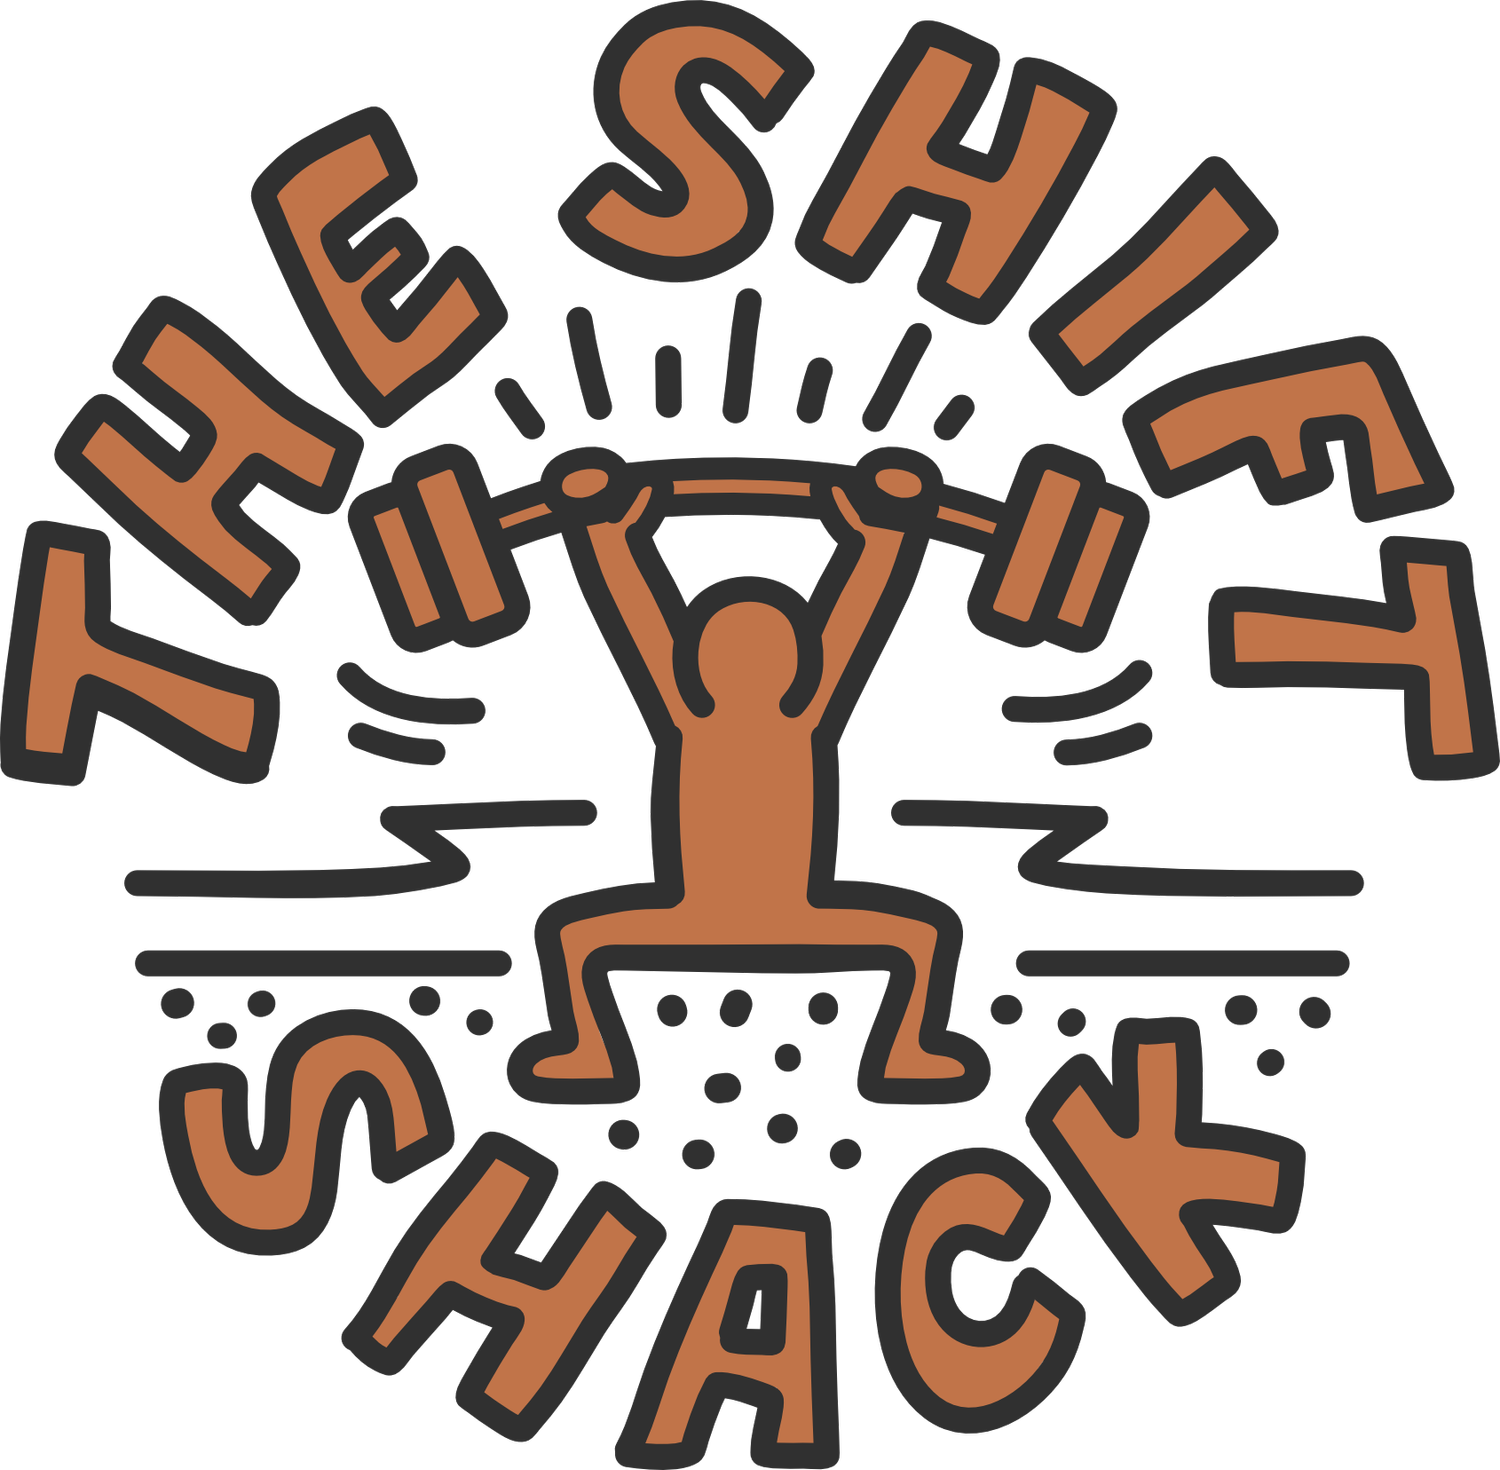 THE SHIFT SHACK